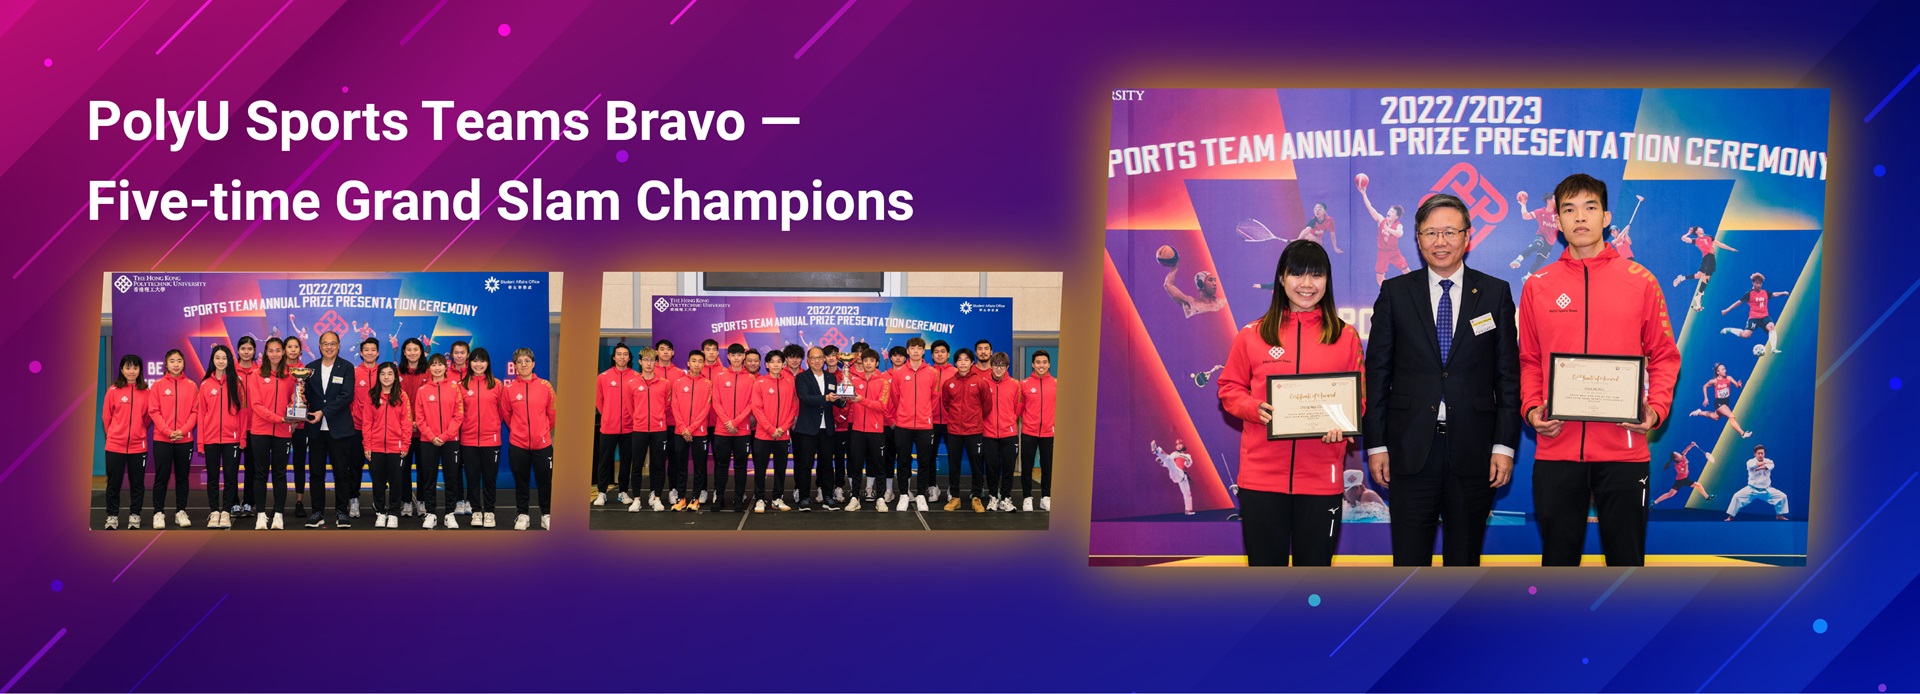 PolyU Sports Teams Bravo — Five-time Grand Slam Champions